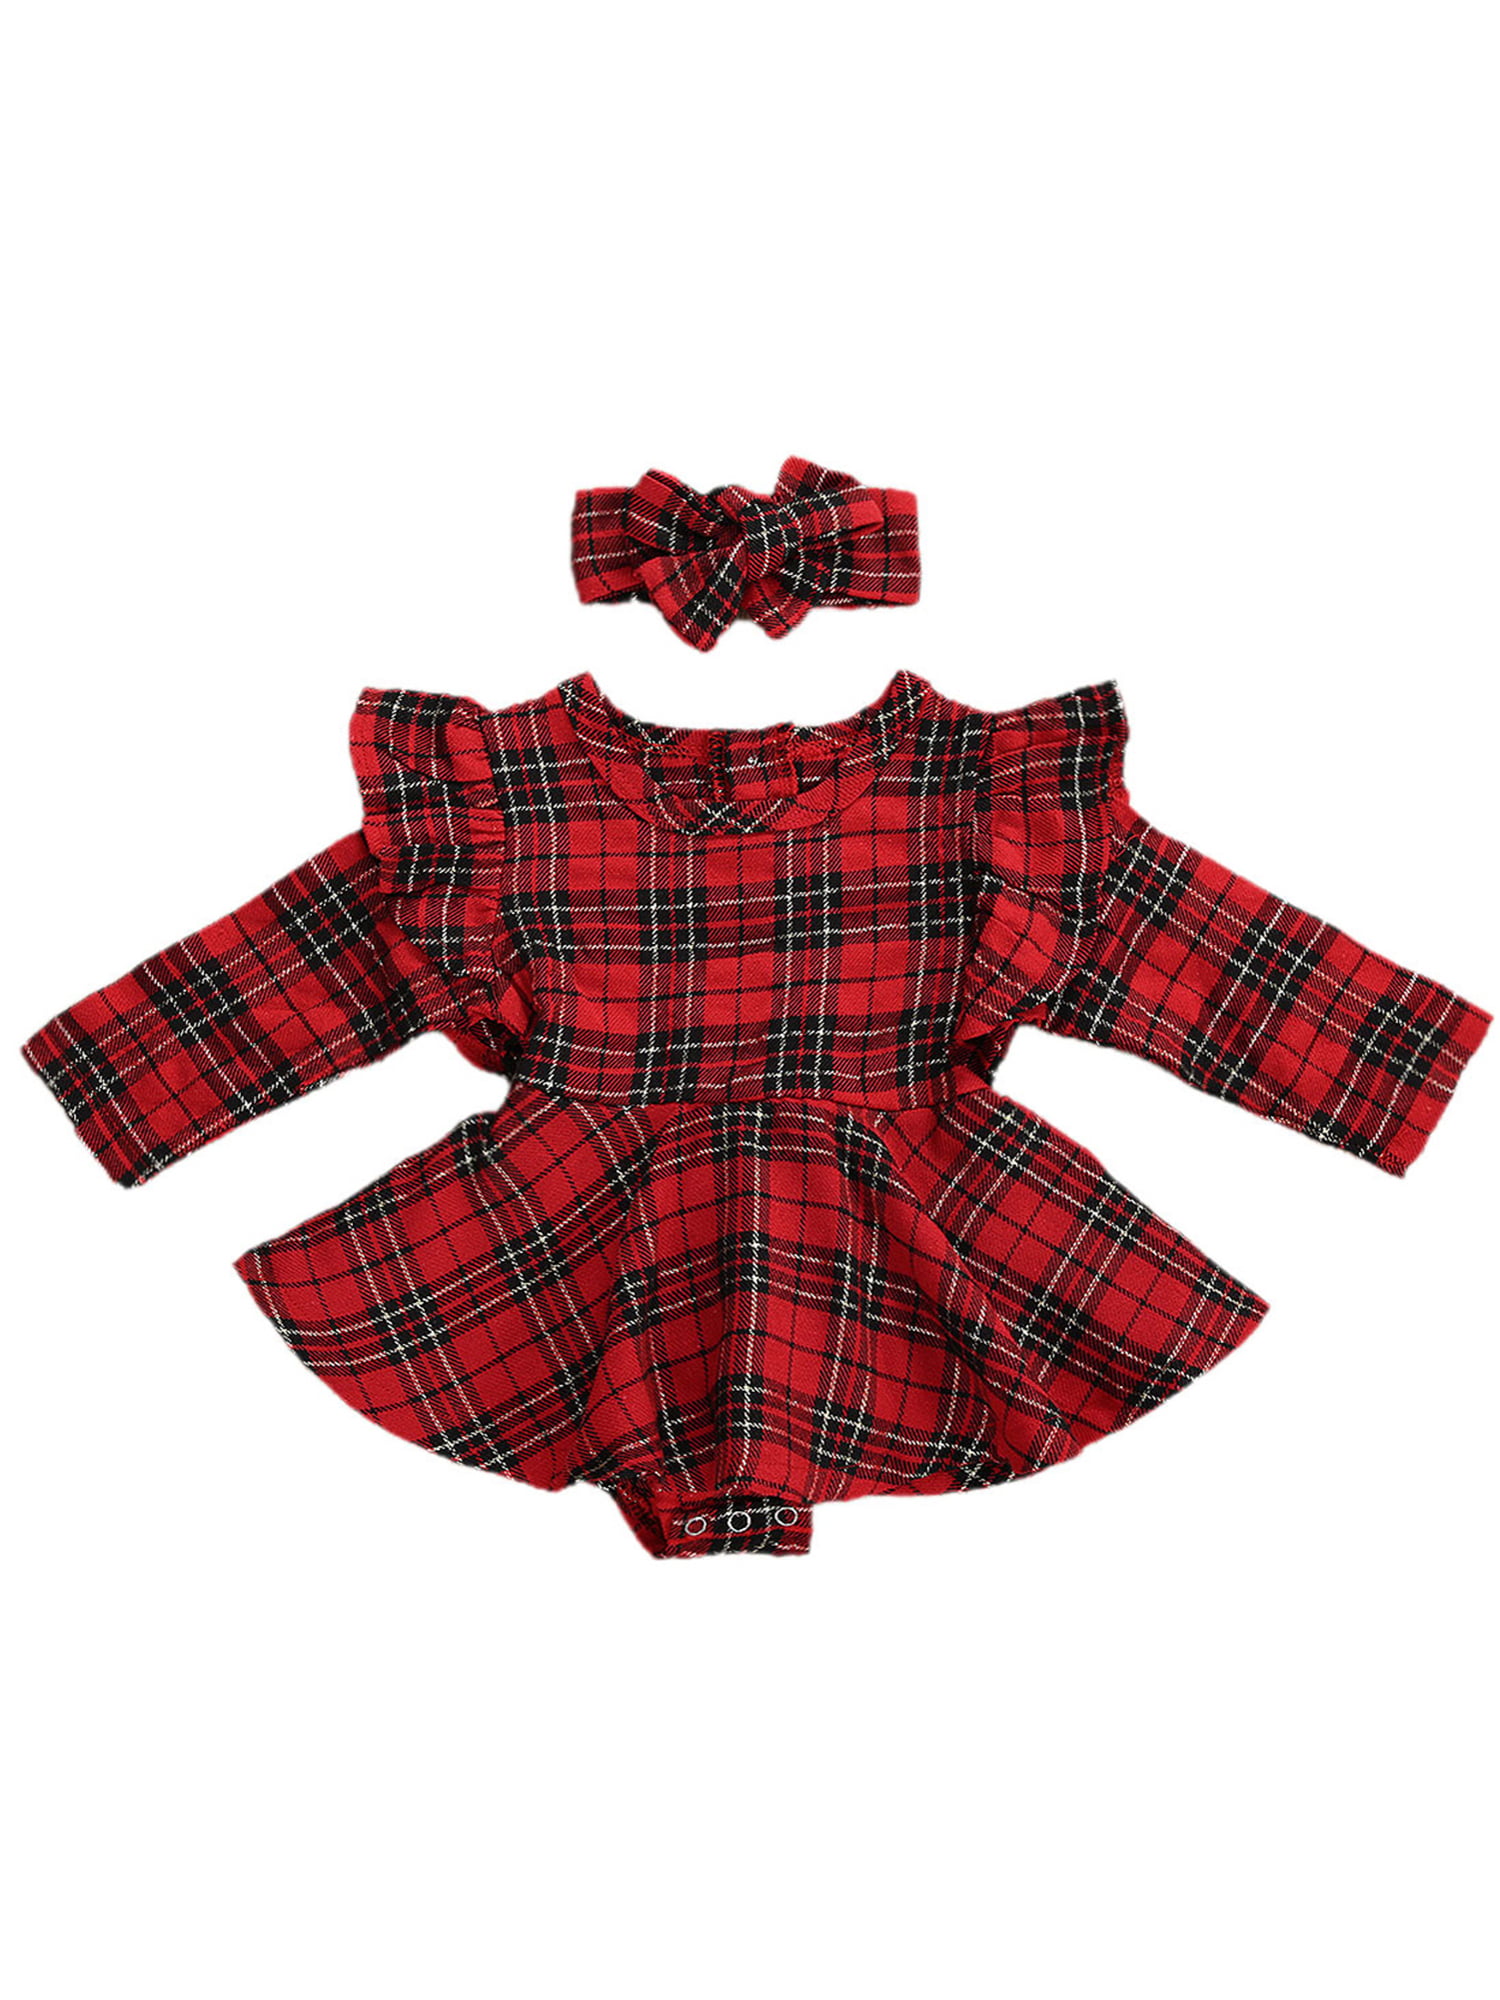 Kid Baby Girls Plaid Christmas Romper Jumpsuit Outfit Cotton Skirt Bodysuit Sets 